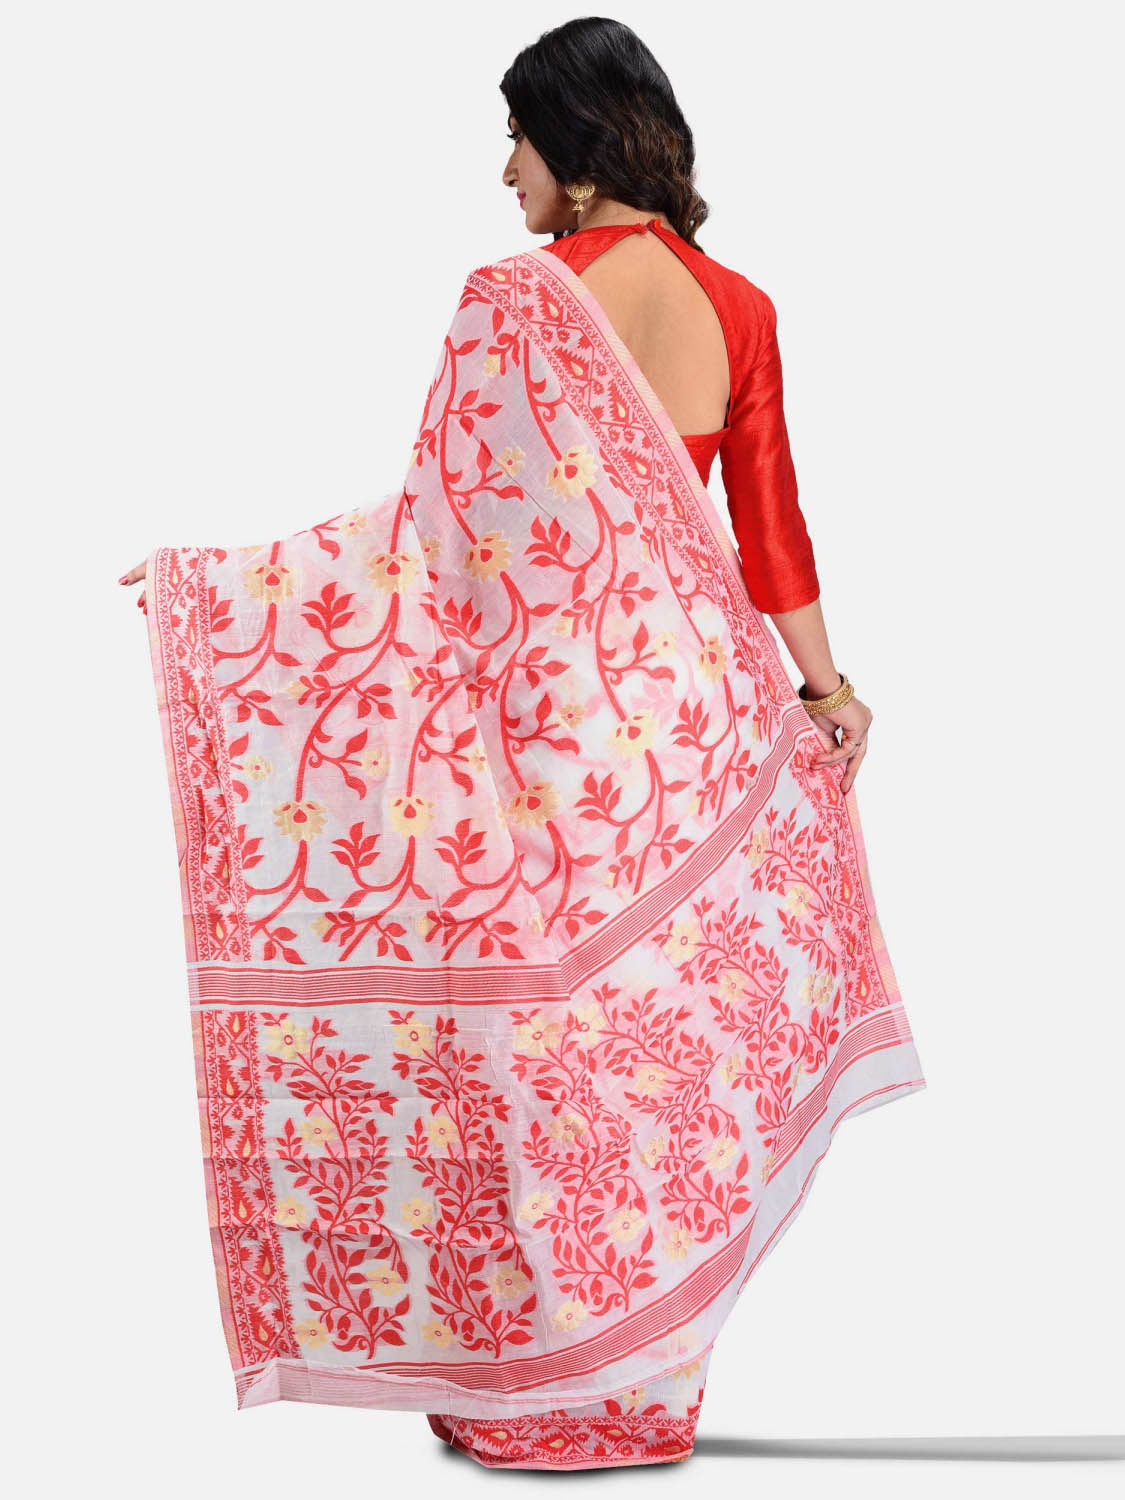 Handloom Jamdani Saree - Red and White - ArtisanSoul